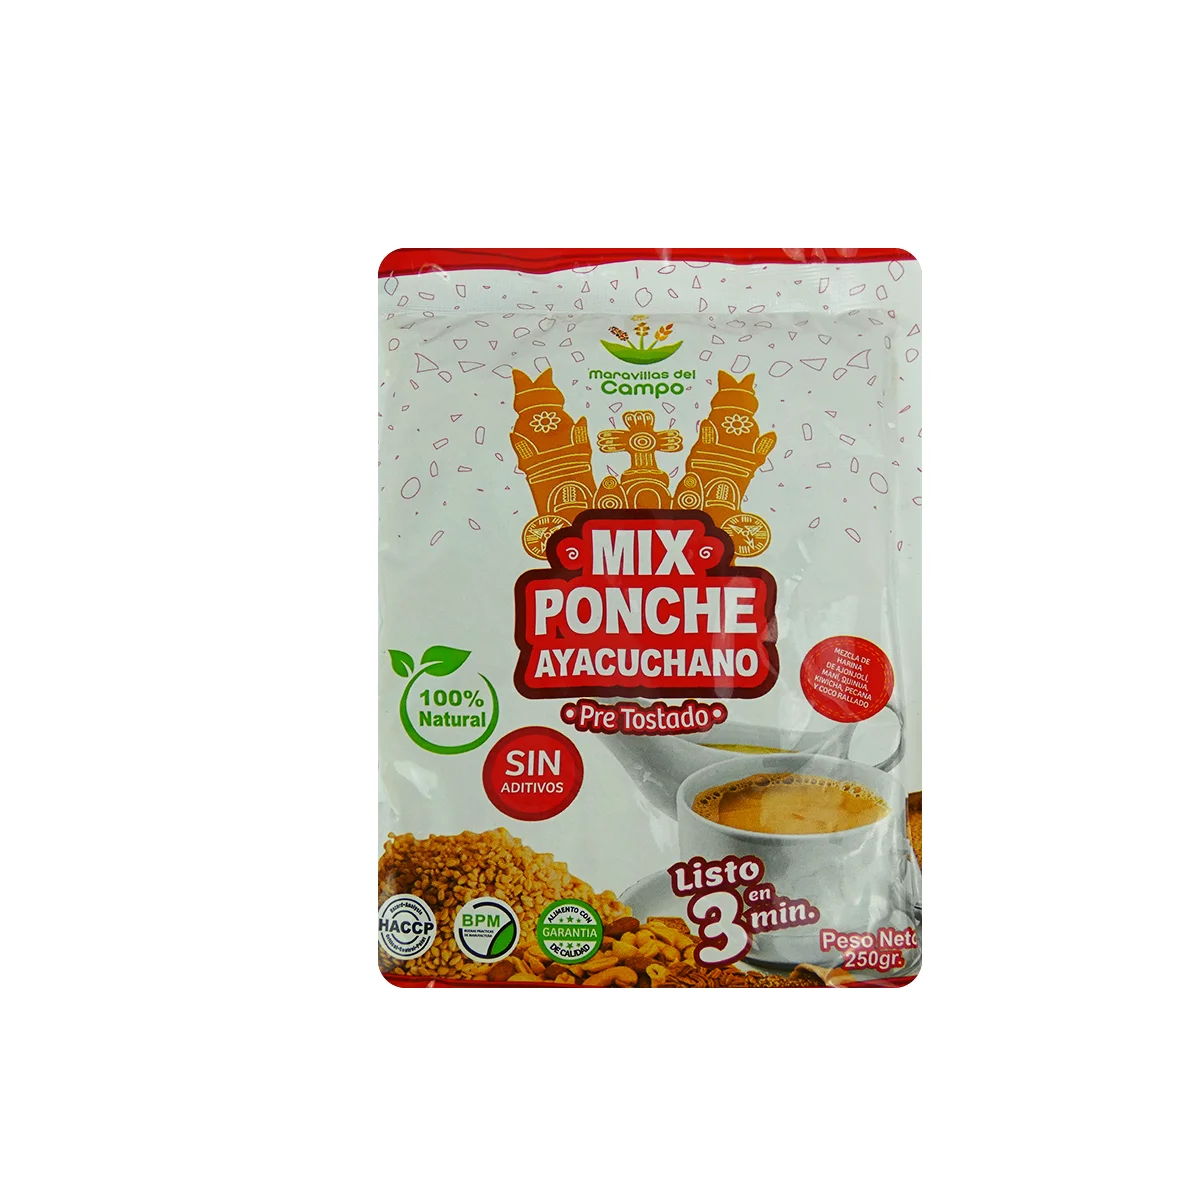 Mix Ponche Ayacuchano